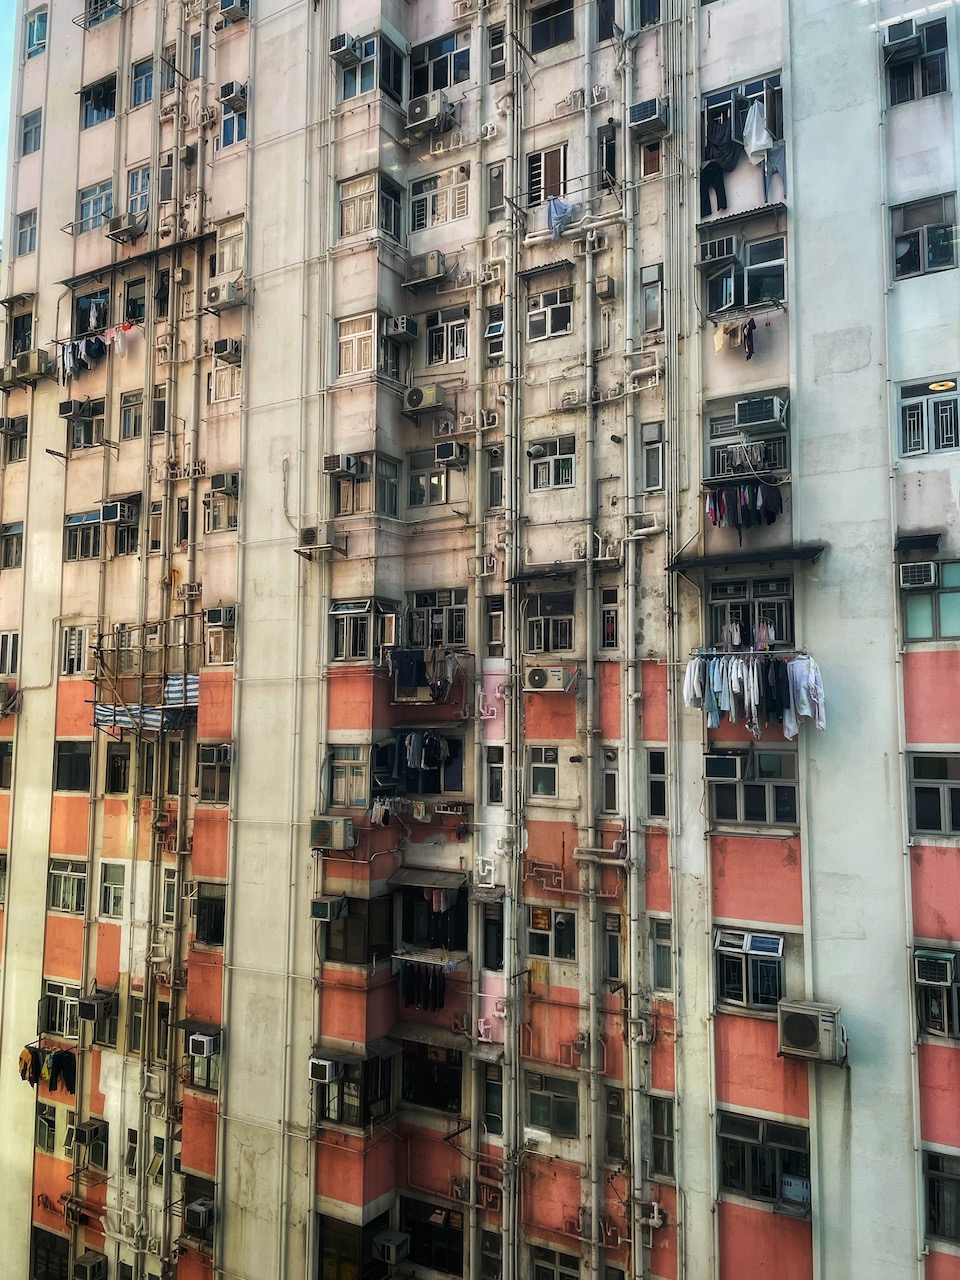 HK building